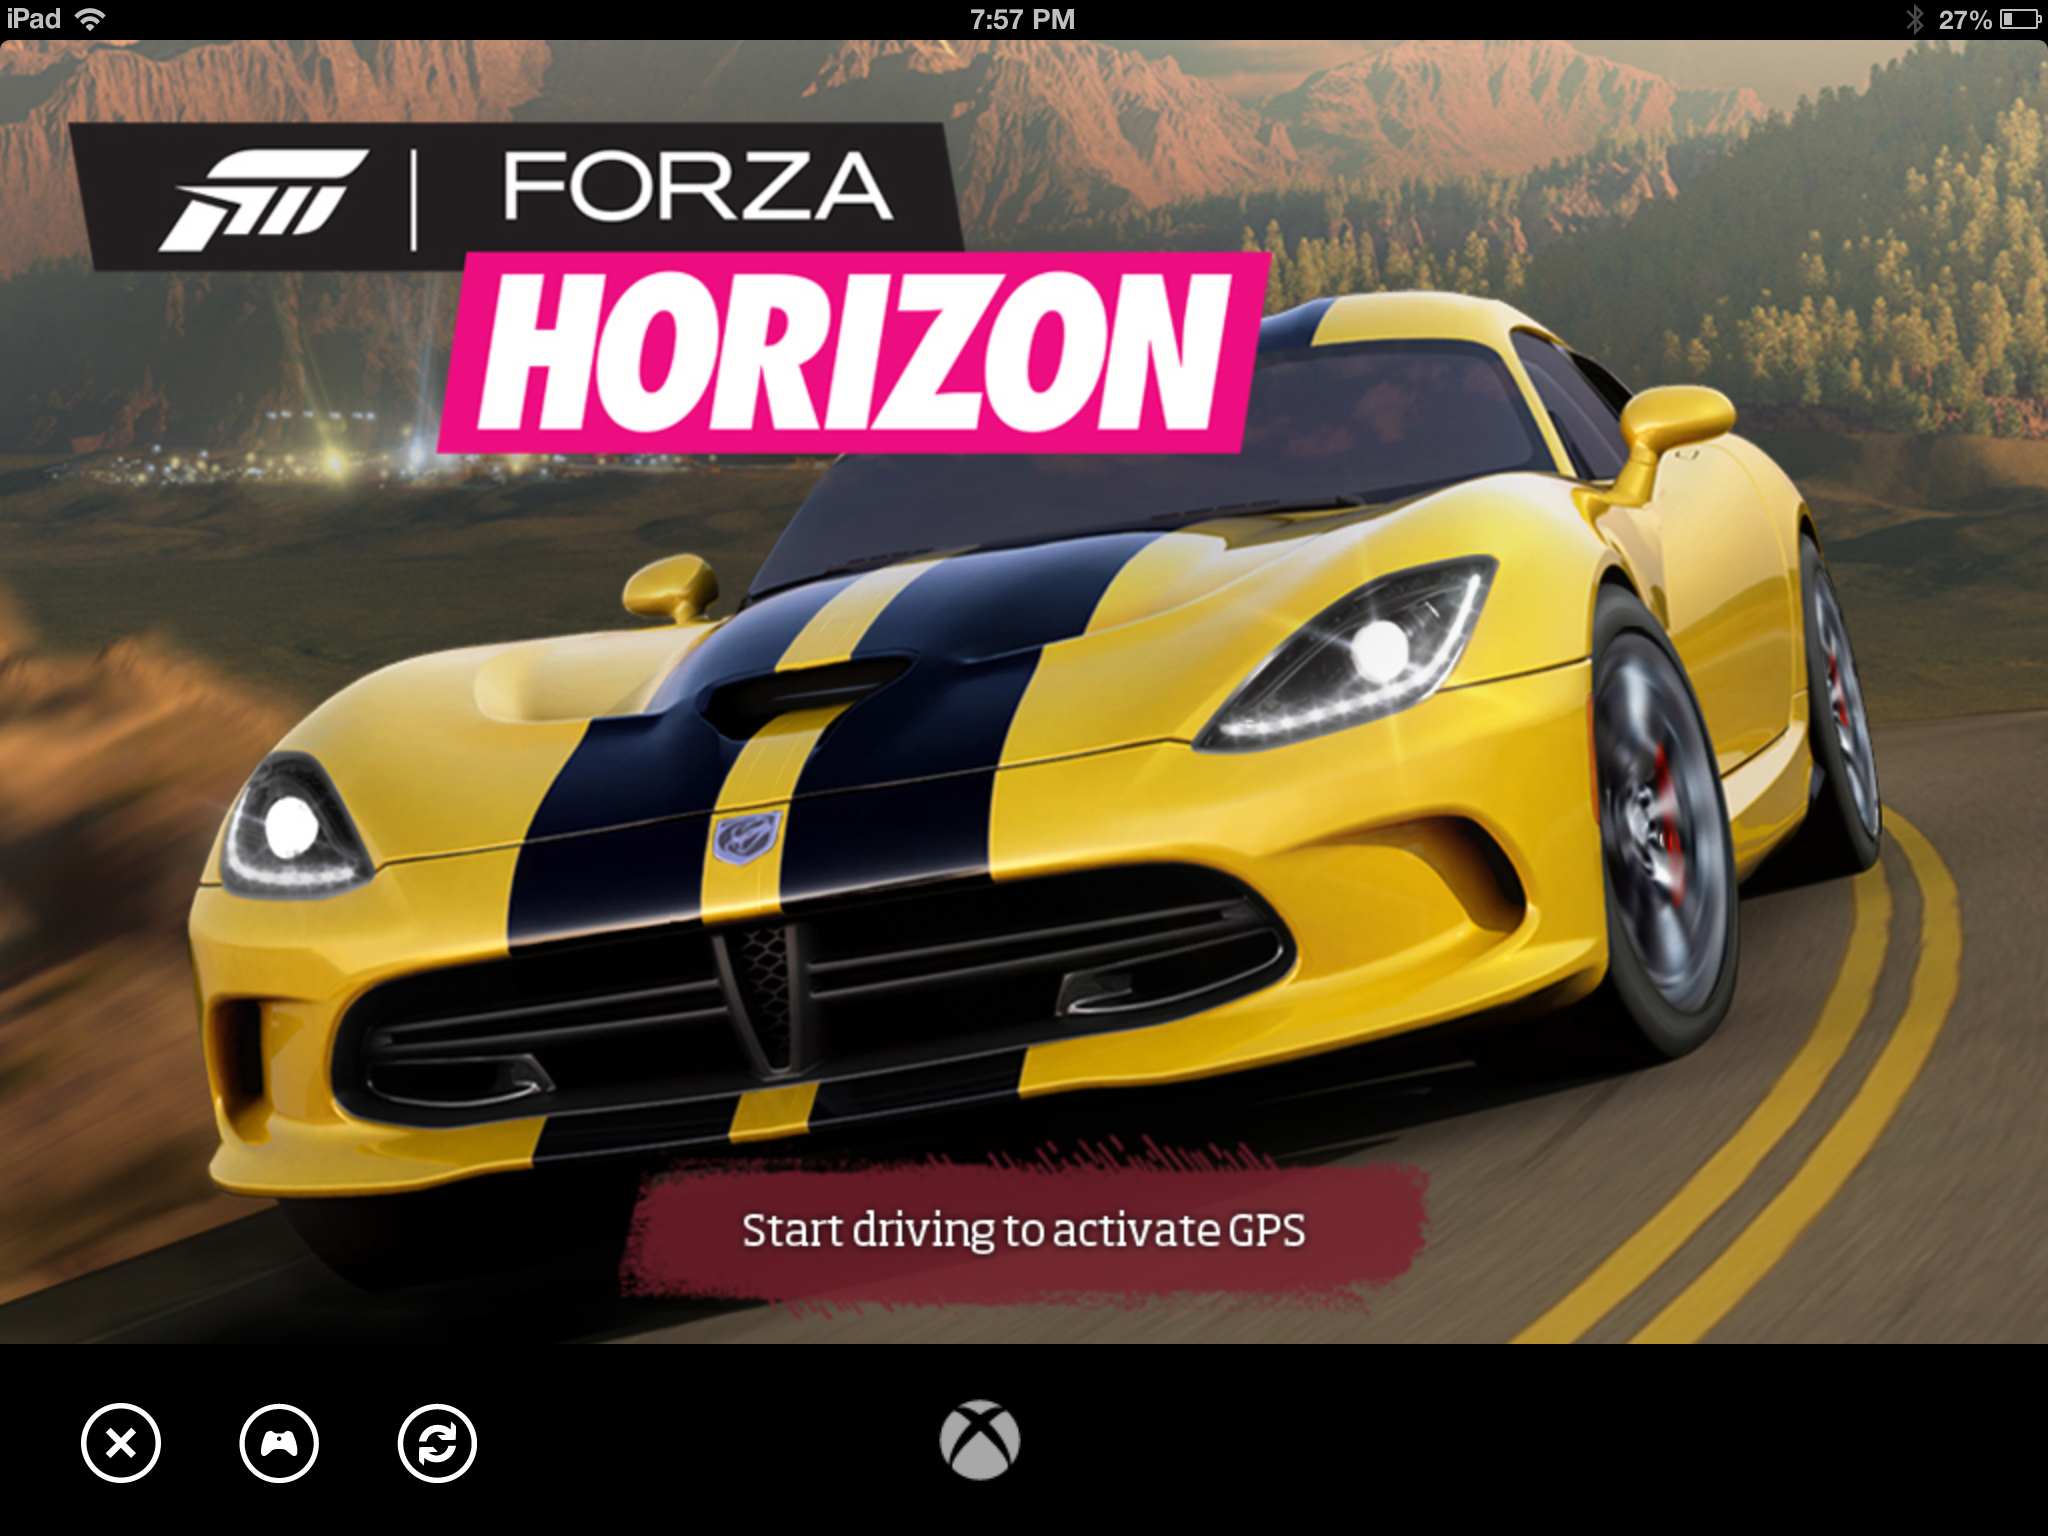 Forza Horizon's Xbox SmartGlass wait screen